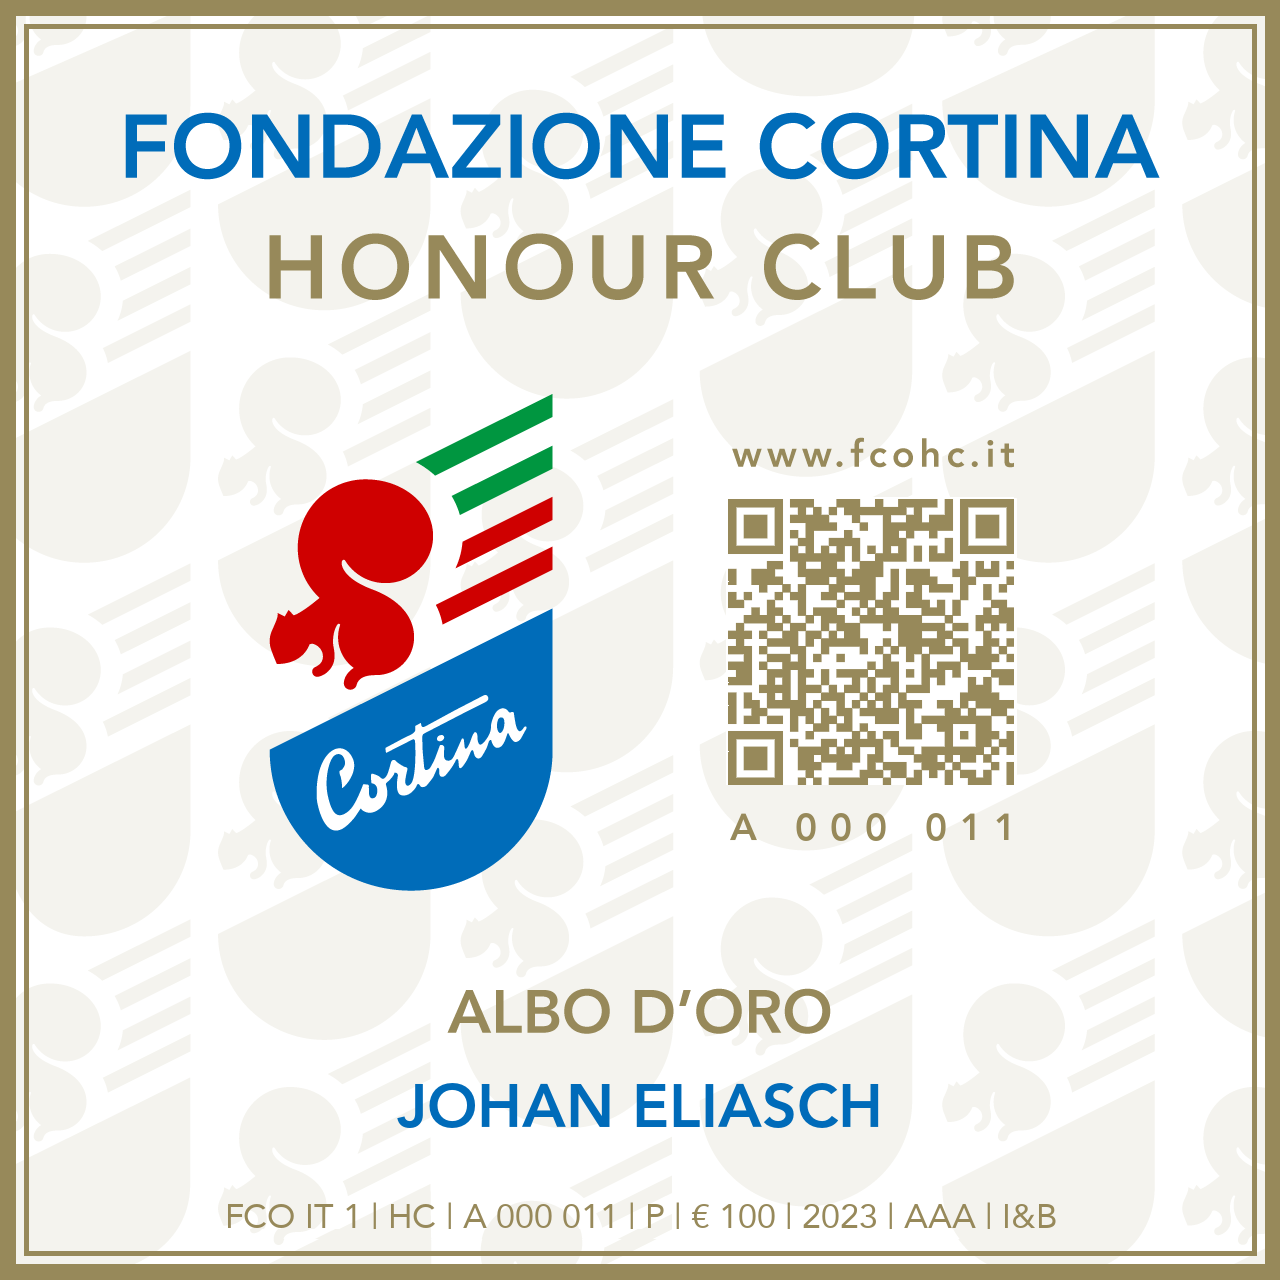 Fondazione Cortina Honour Club - Token Id A 000 011 - JOHAN ELIASCH